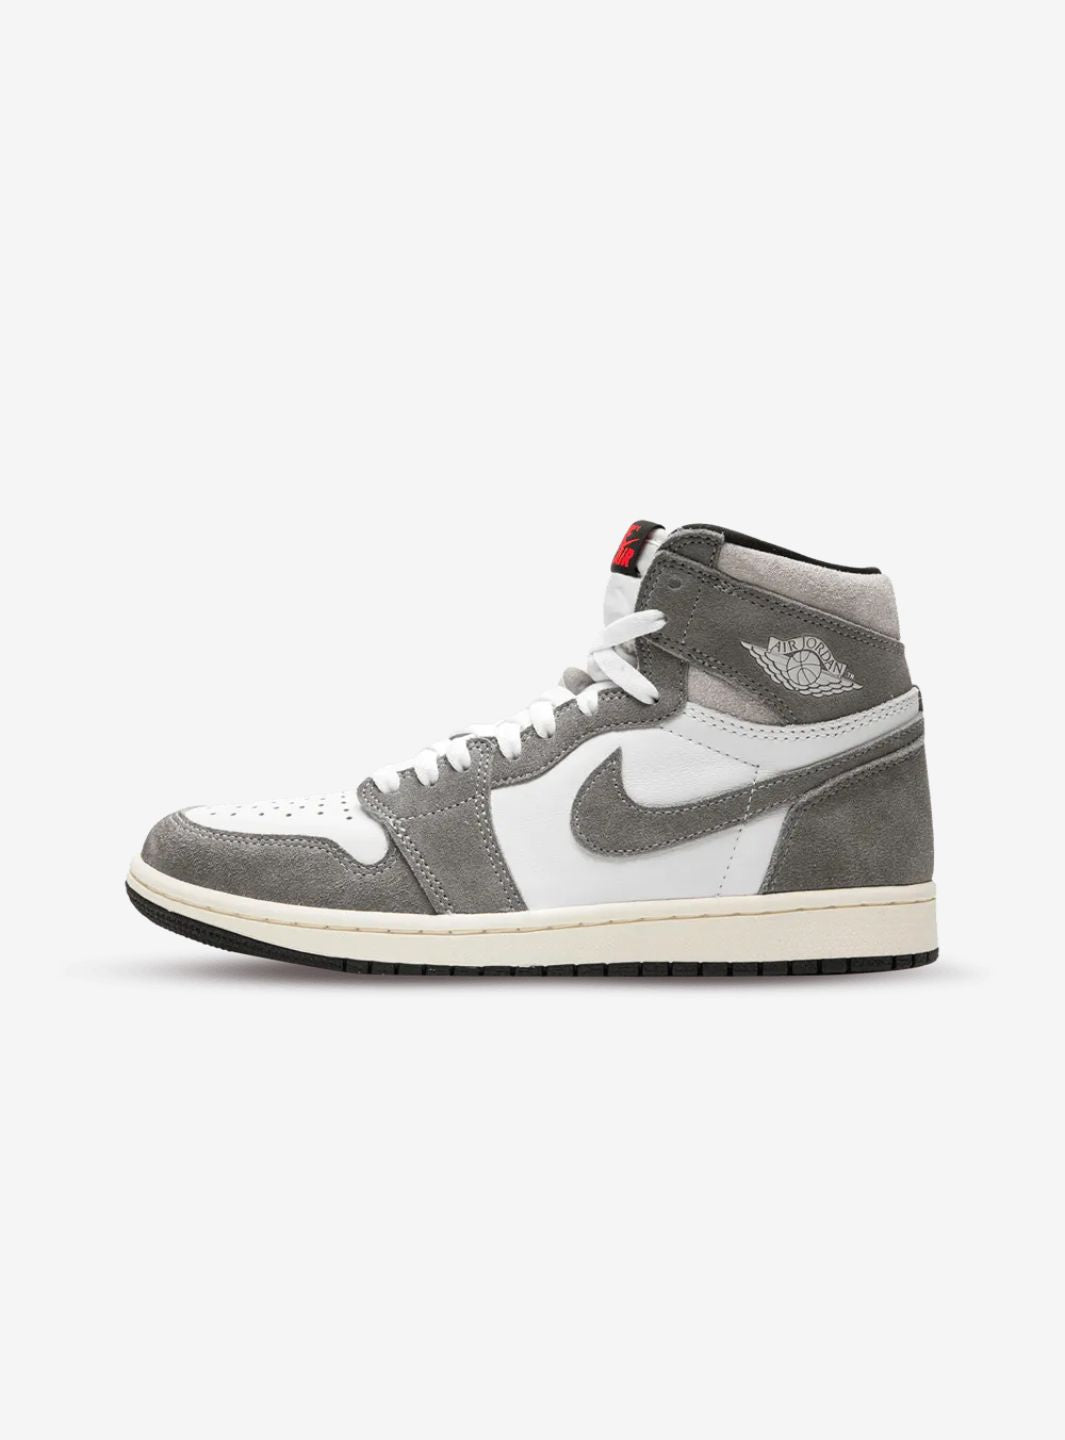 Jordan 1 High Washed Grey